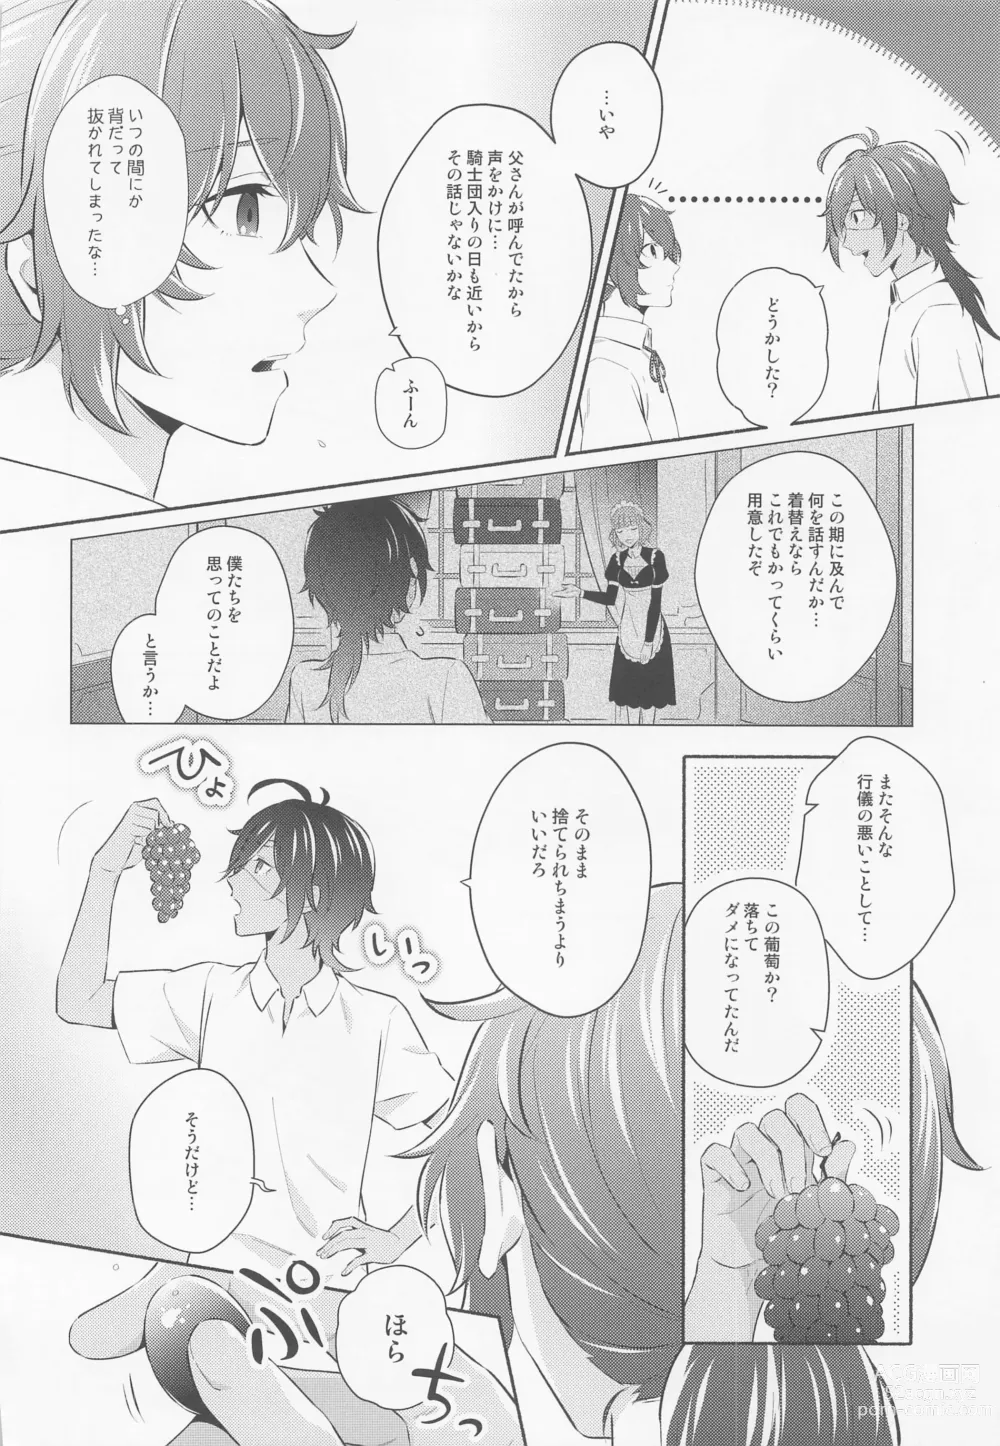 Page 7 of doujinshi Kimi to Yoake o